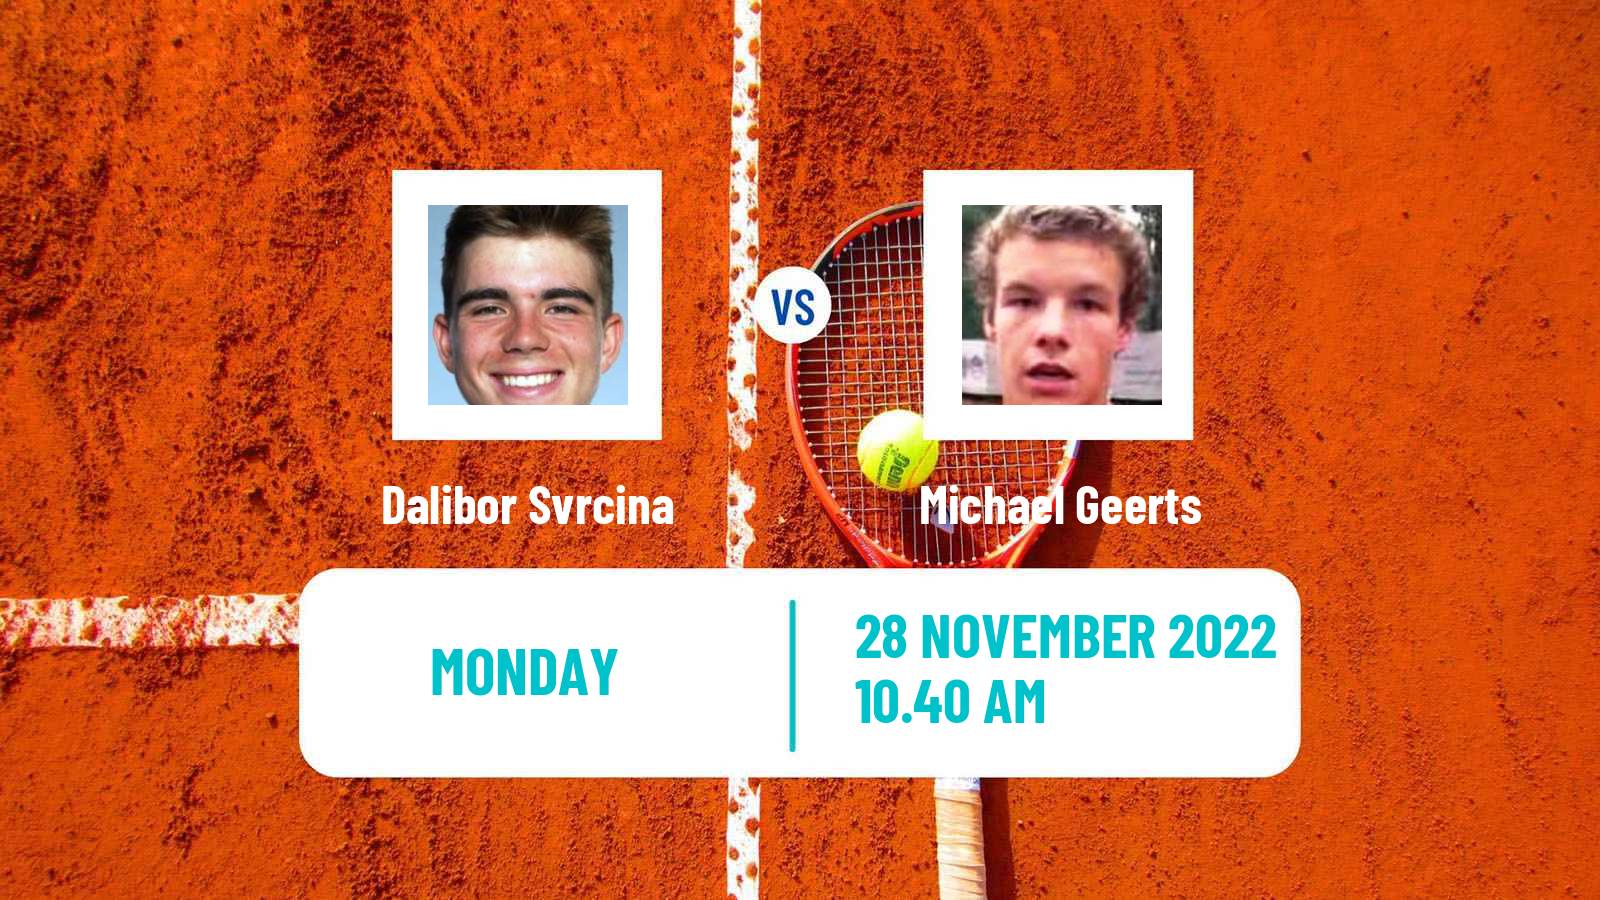 Tennis ATP Challenger Dalibor Svrcina - Michael Geerts